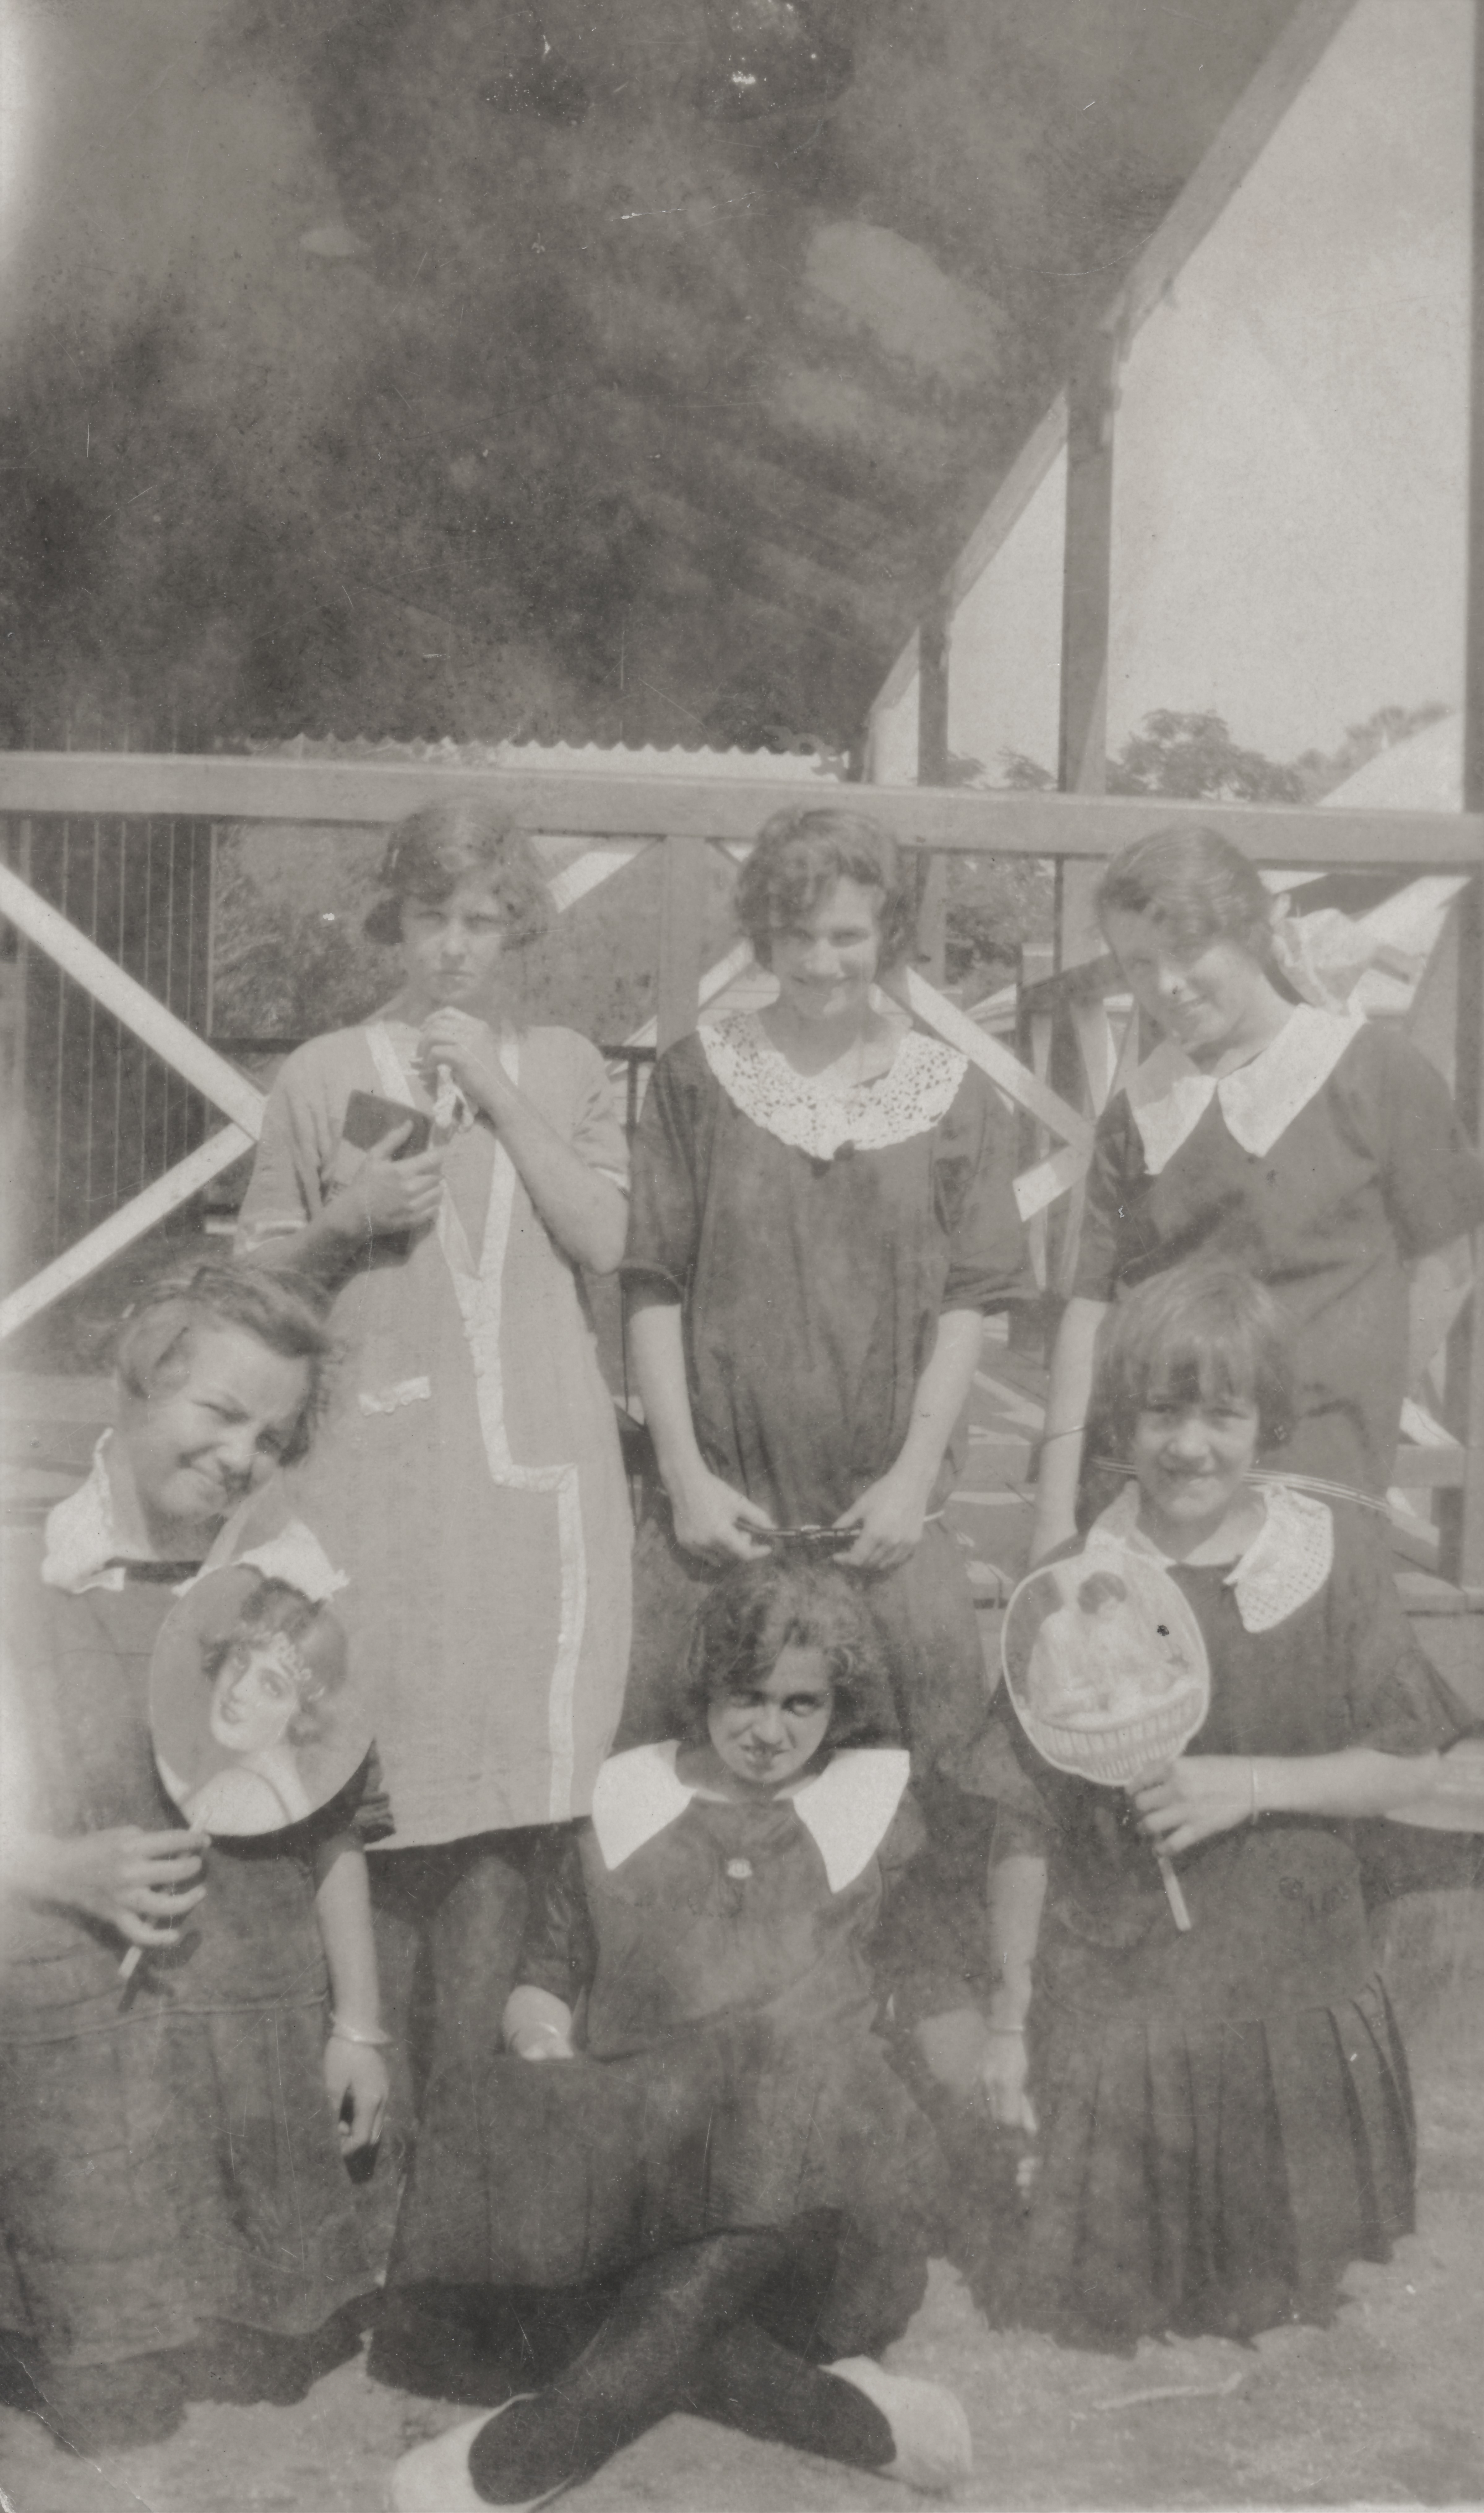 1925-26 Students